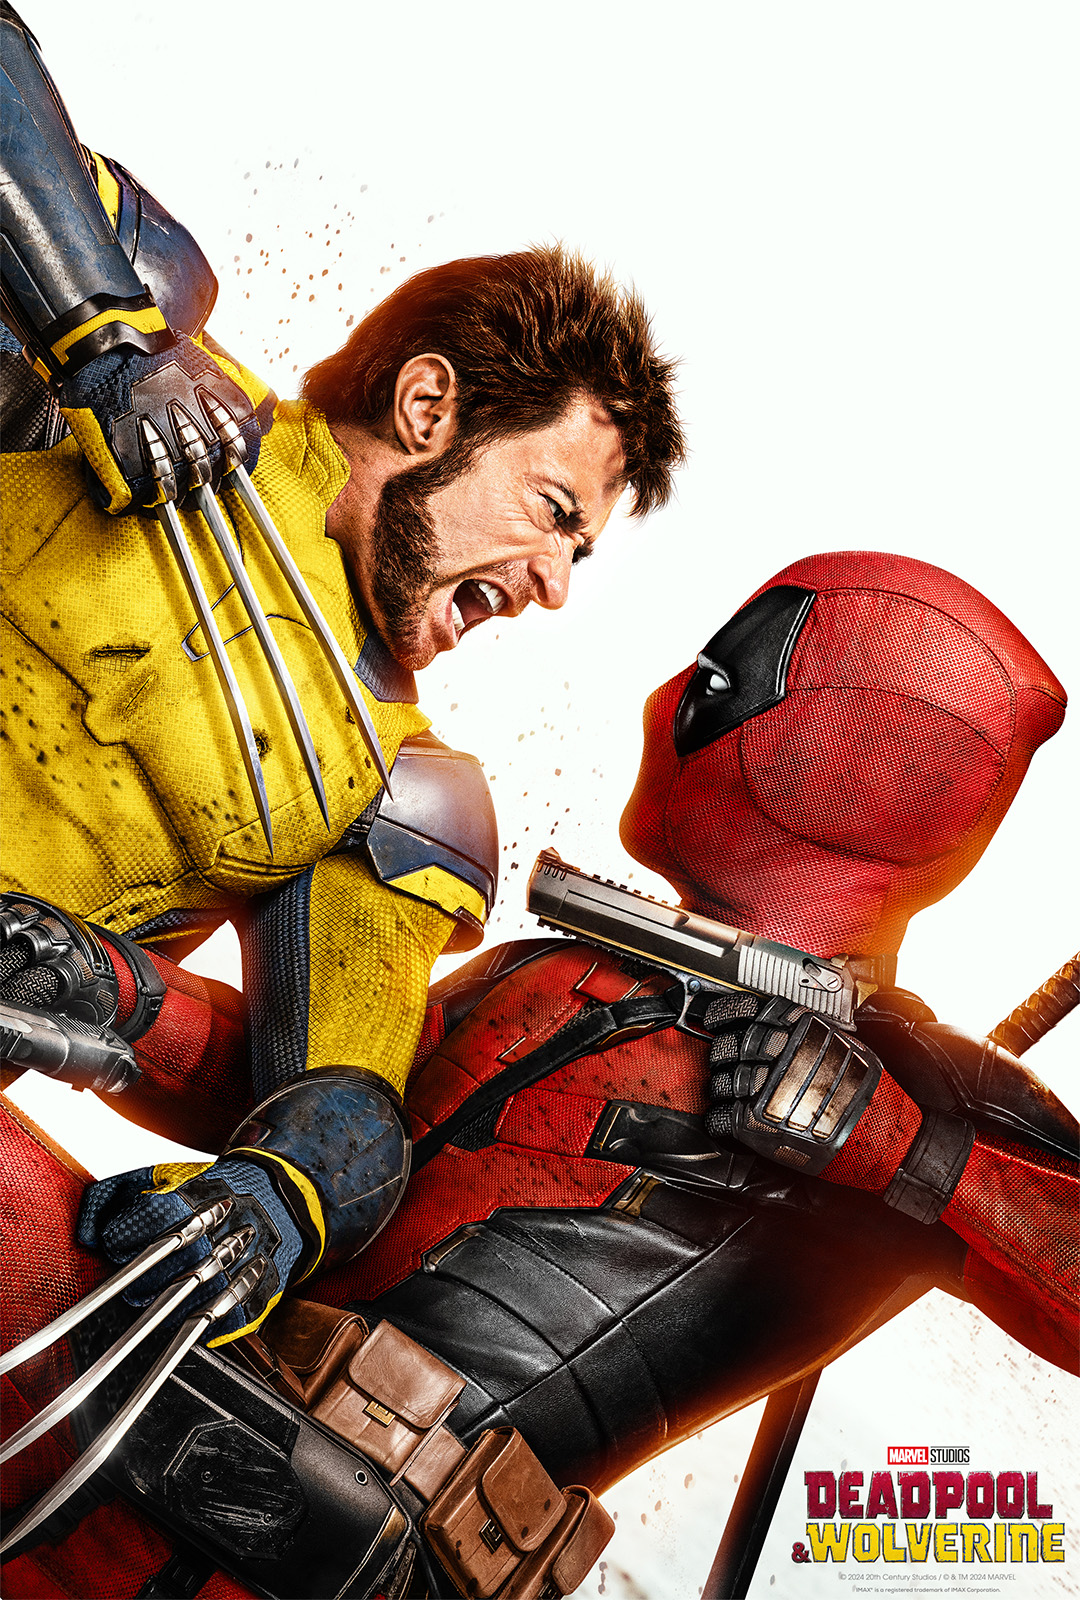 Movie Poster: Deadpool & Wolverine